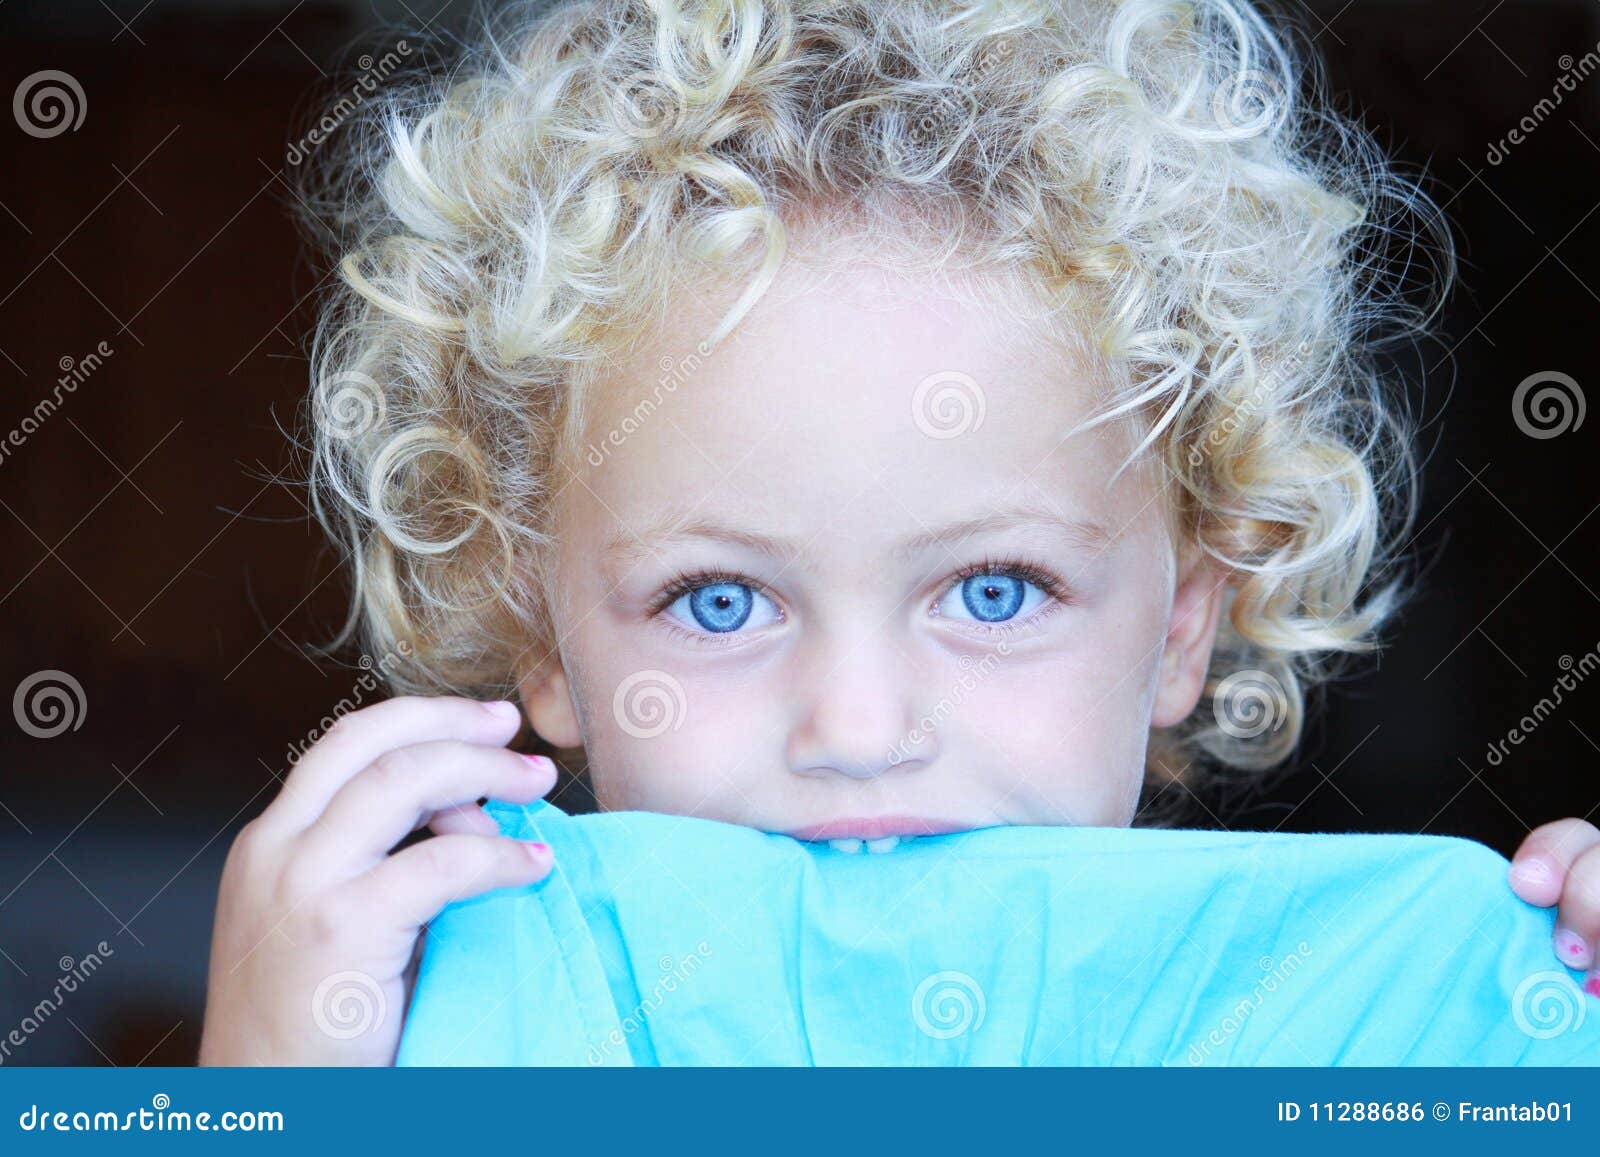 Pretty Toddler Portrait Stock Photo Image Of Good Close 11288686